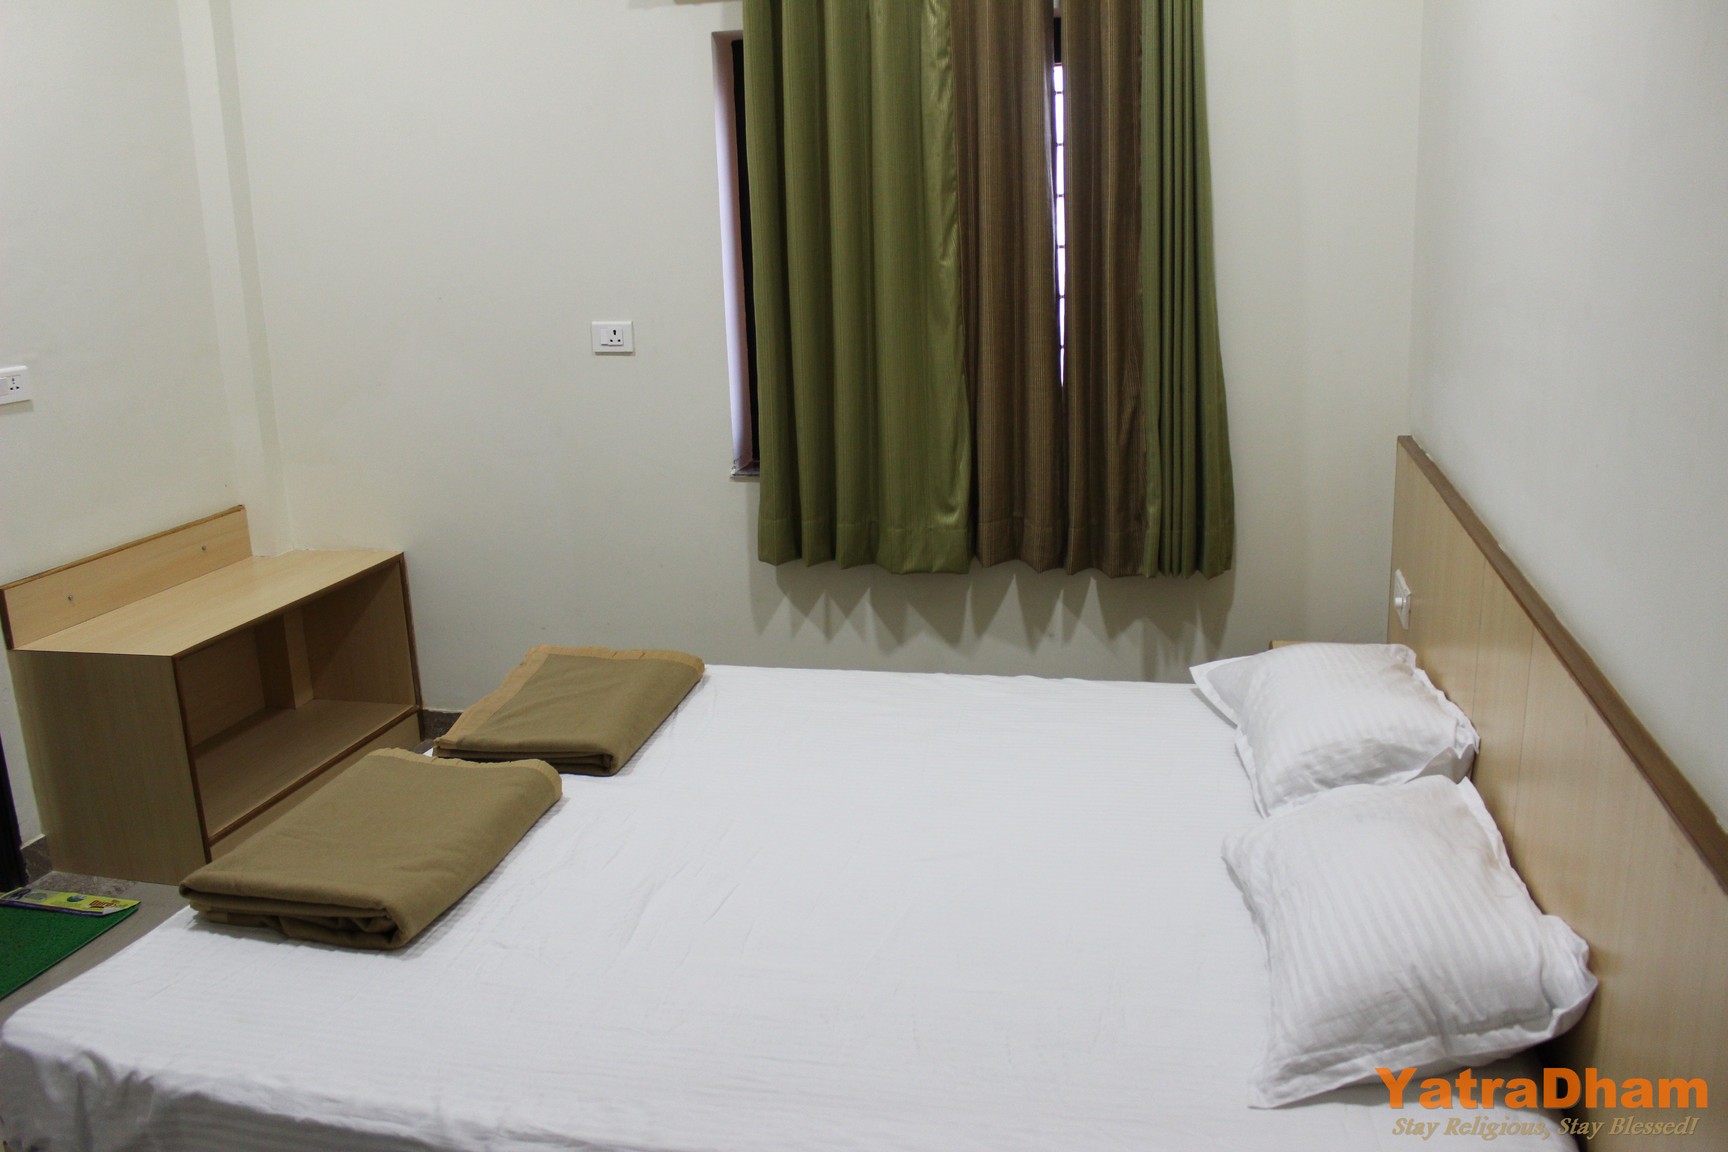 Jodhpur_Maheshwari_Bhavan_2 Bed_A/c. Room_View1